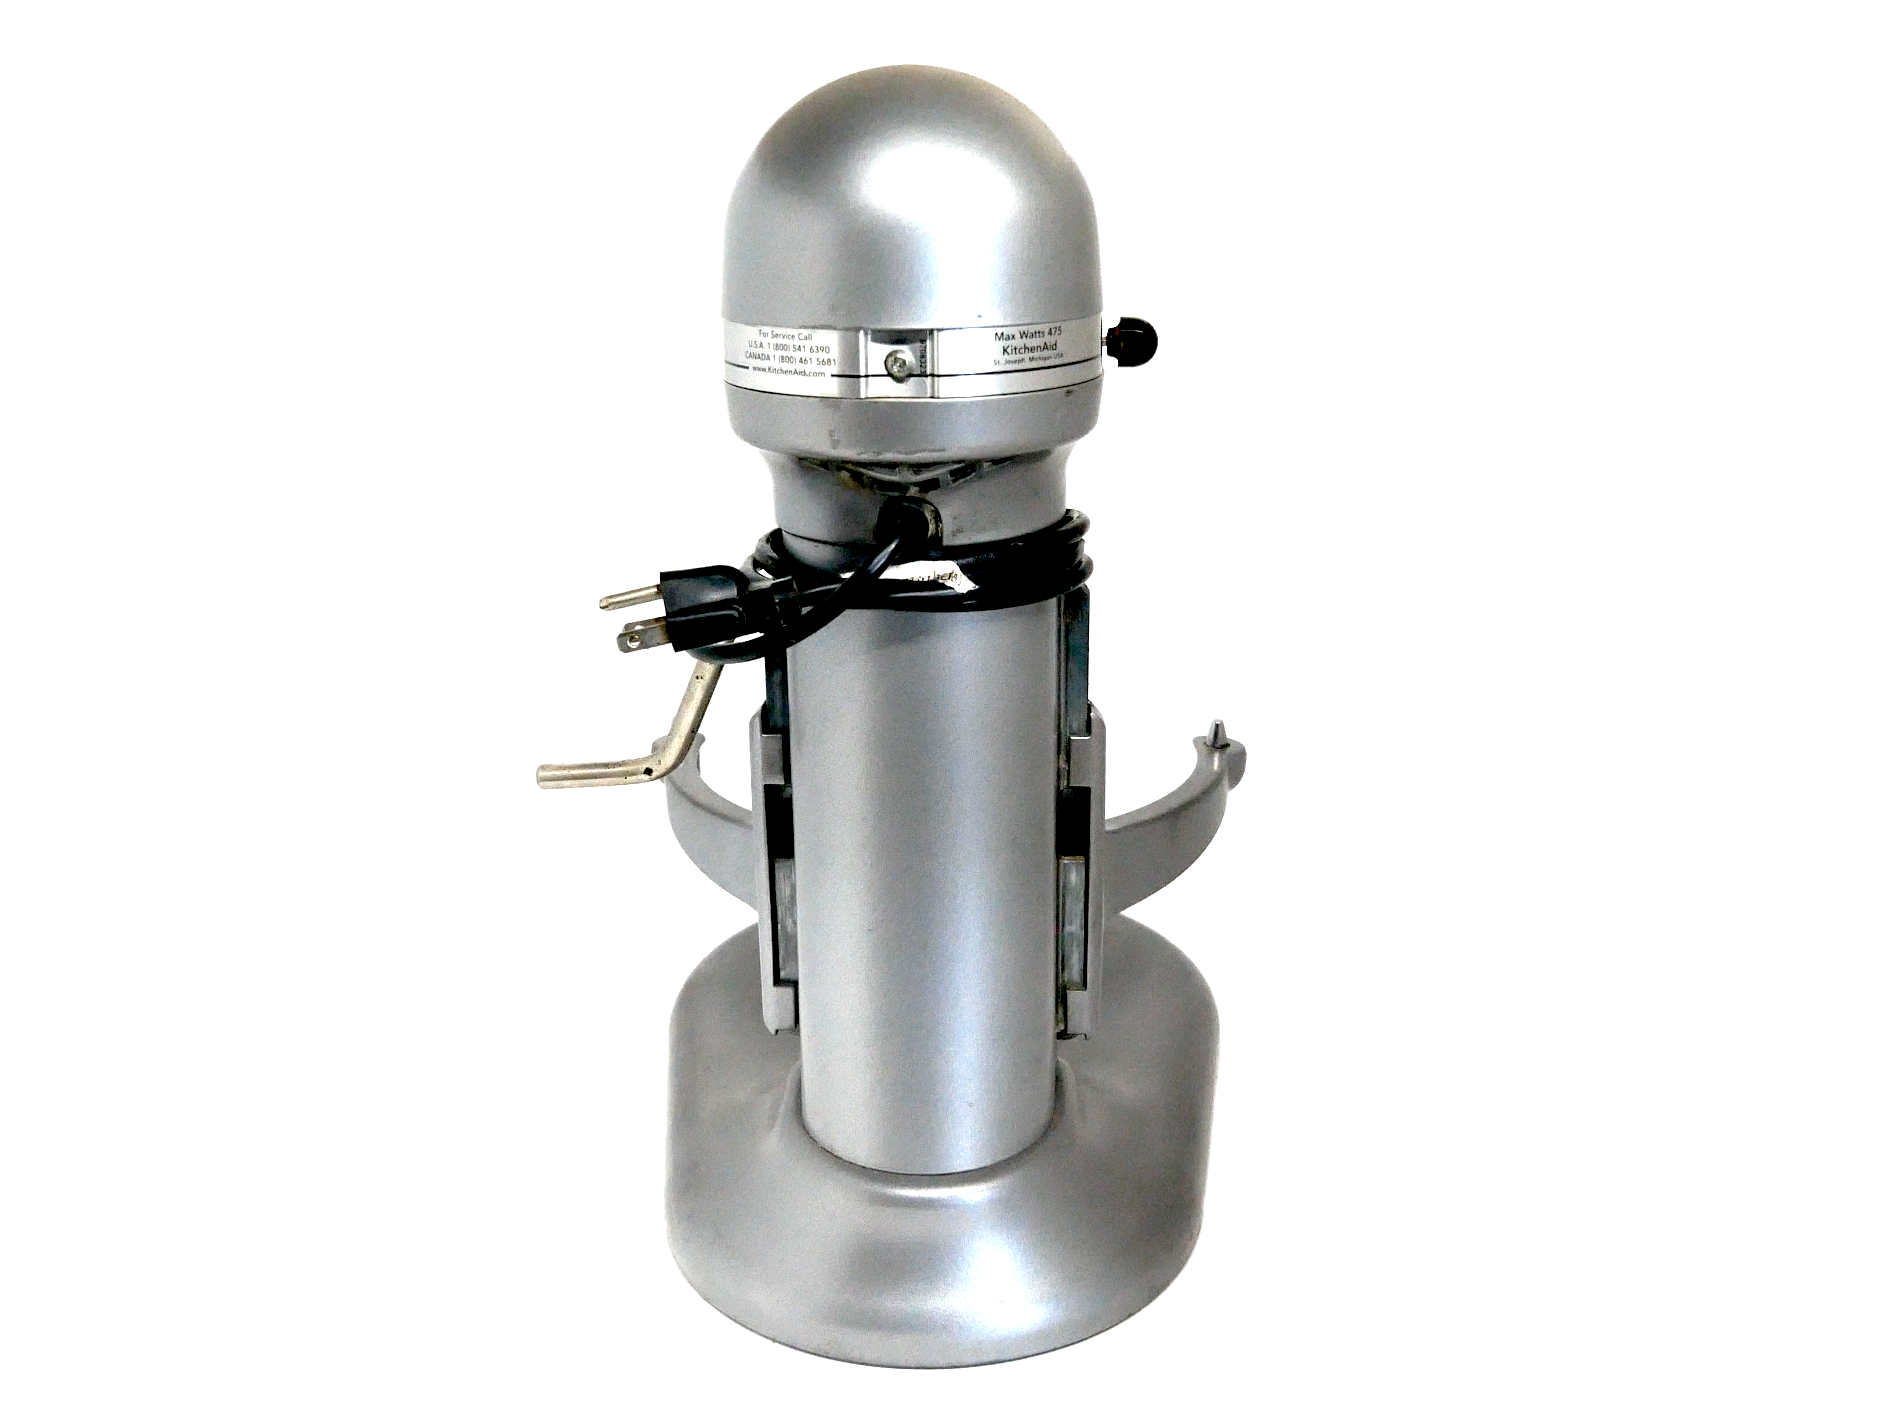 At Auction: Kitchen Aid 5-Plus Bowl Lift Stand Mixer